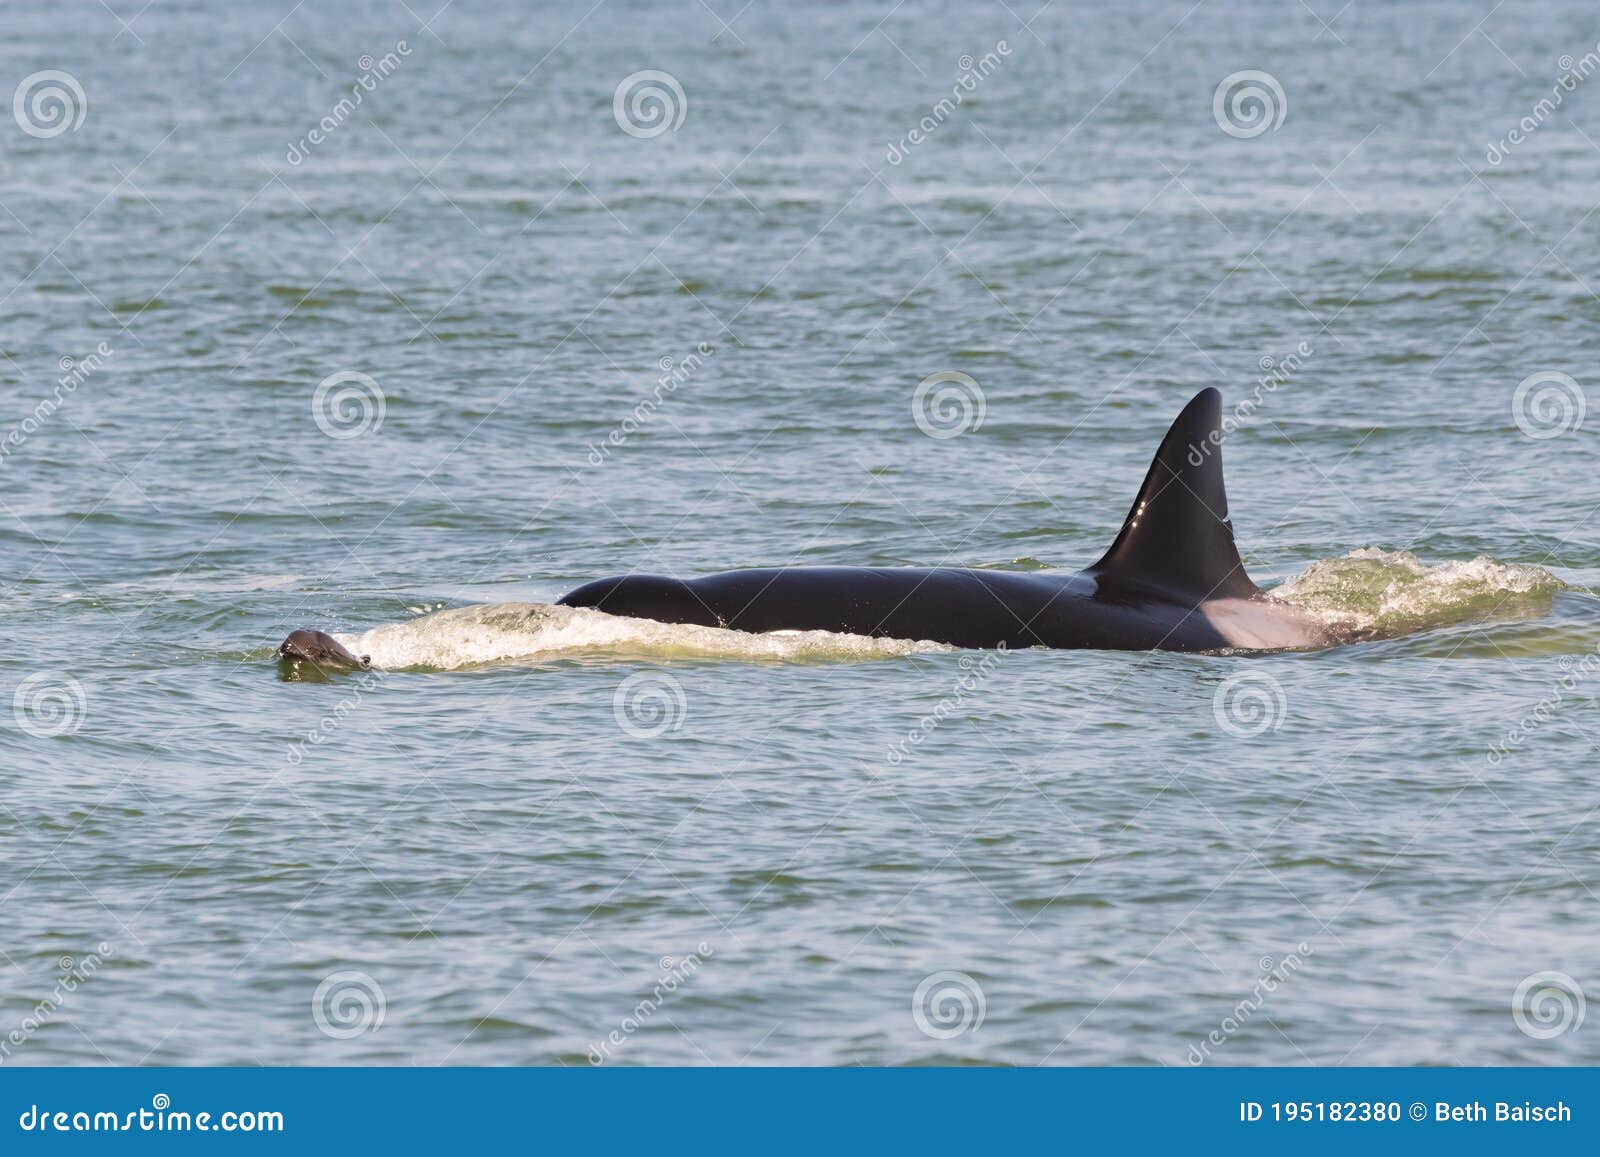 transient killer whale hunting harbour porpoise